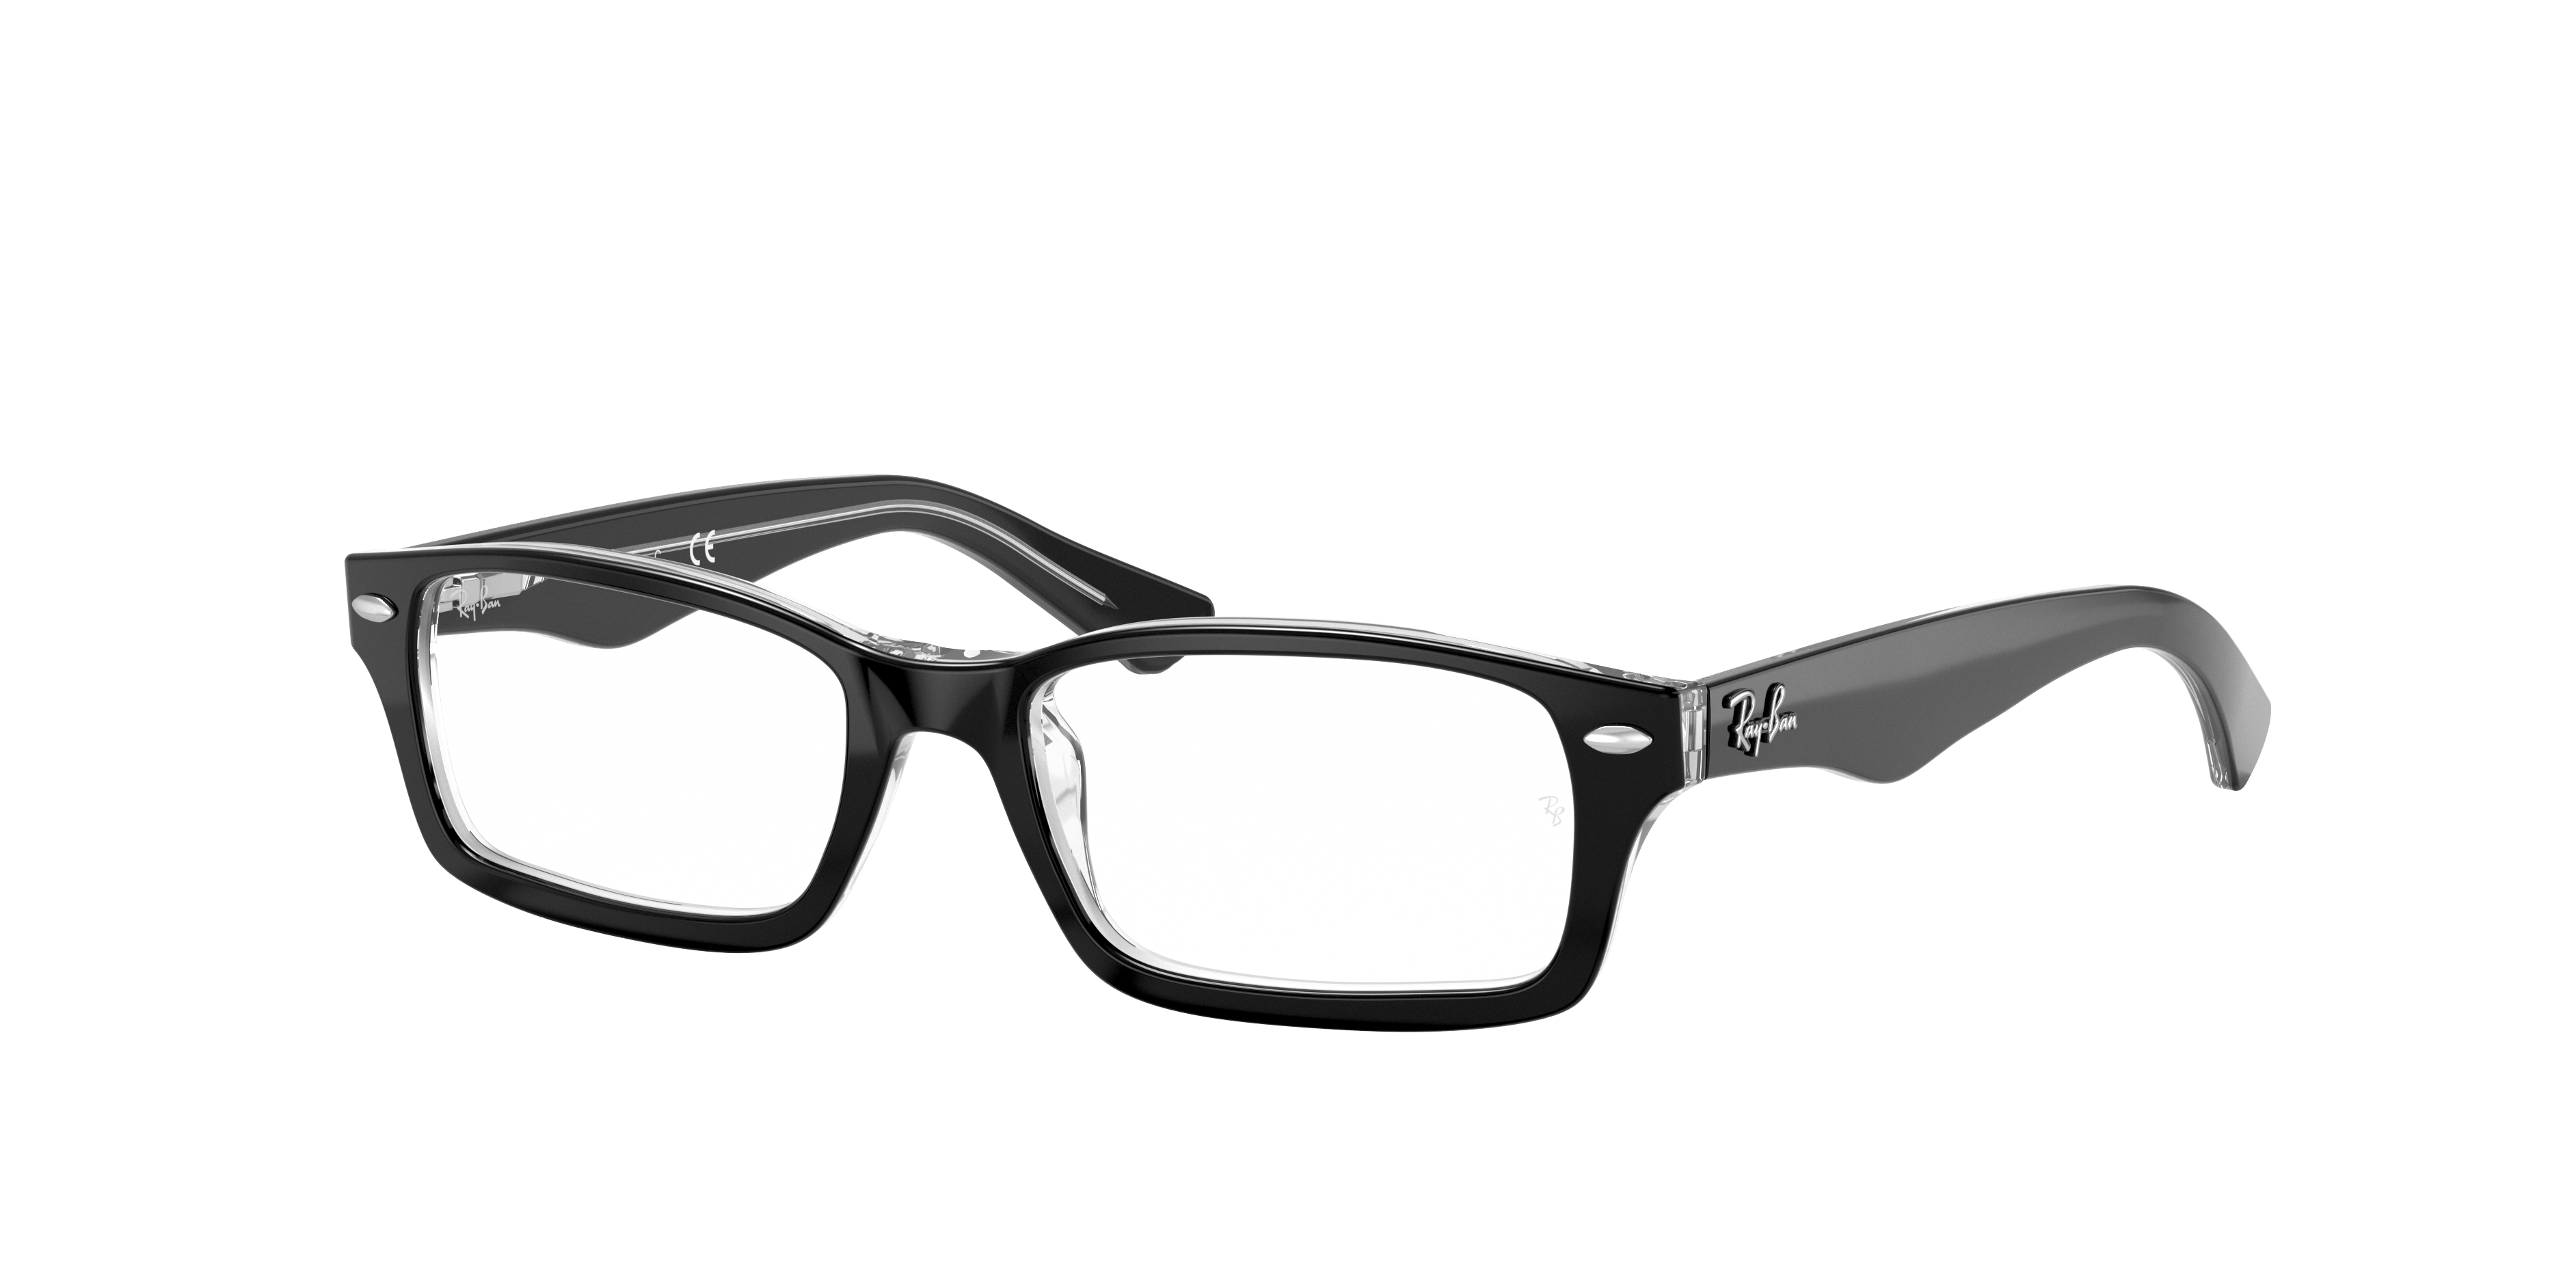 Rb1530 Optics Kids Eyeglasses with Black On Transparent Frame | Ray-Ban®